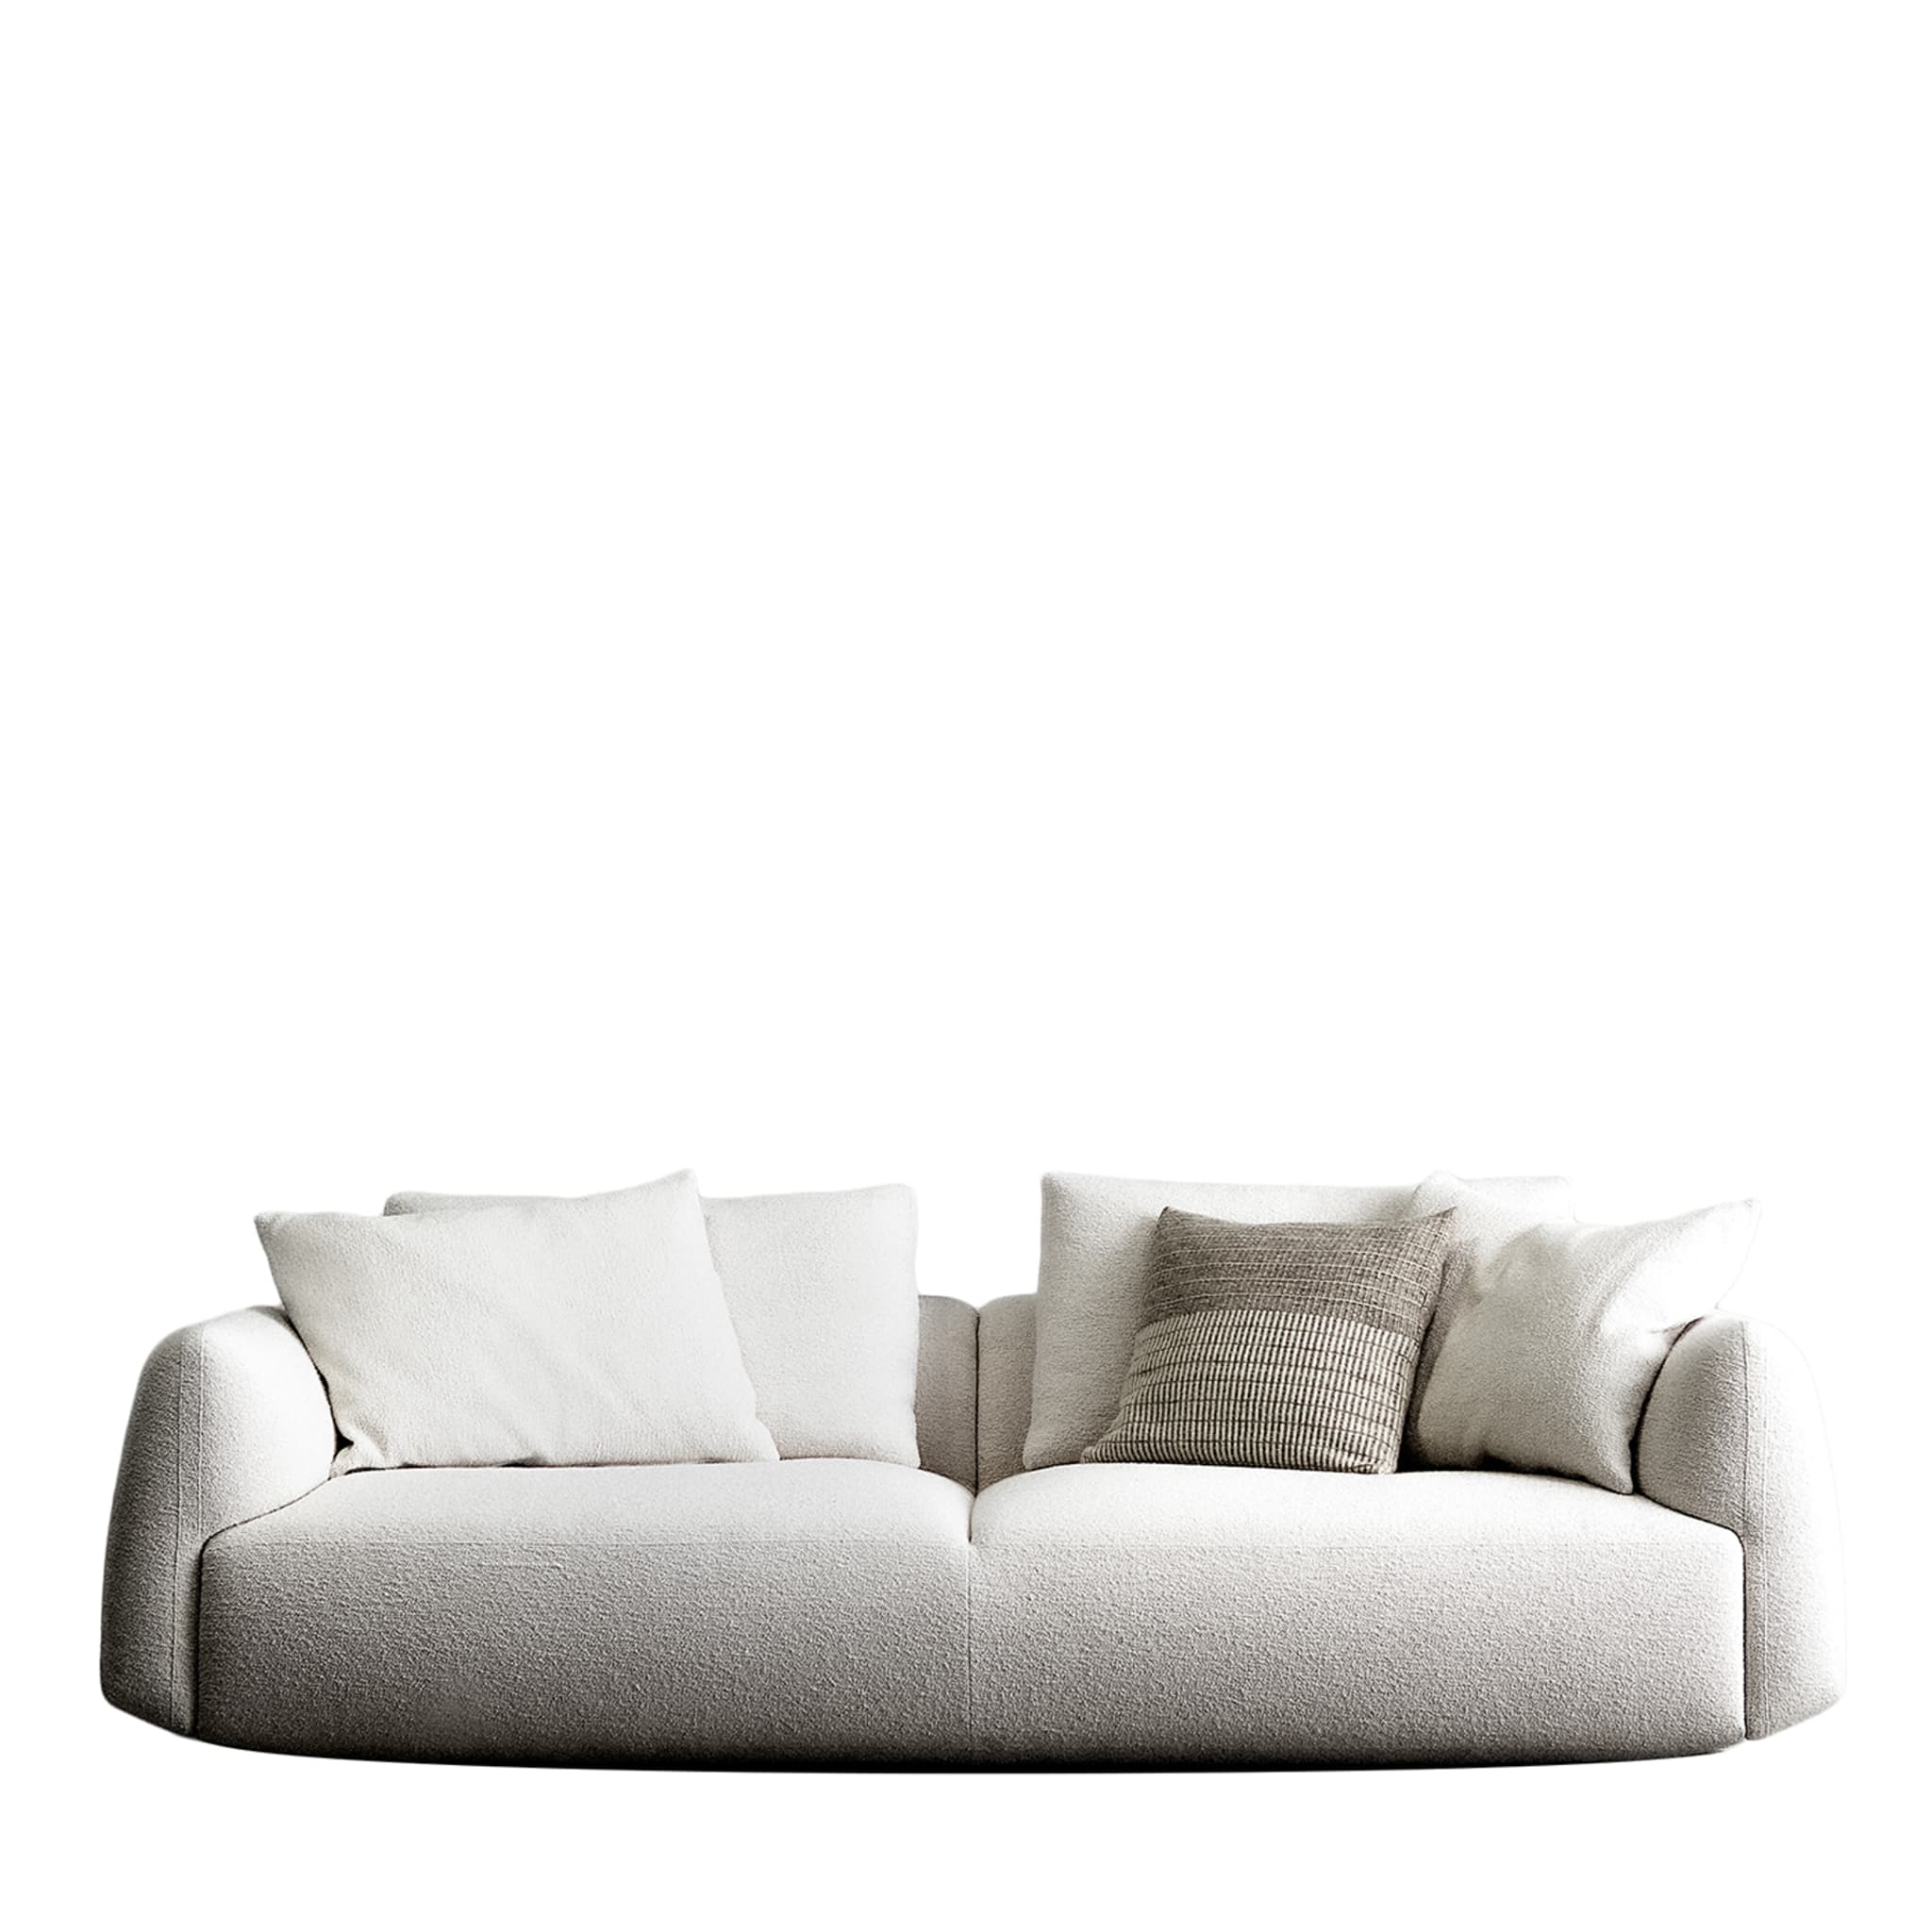 Naxos 3-Seater White Sofa by Ludovica + Roberto Palomba - Main view